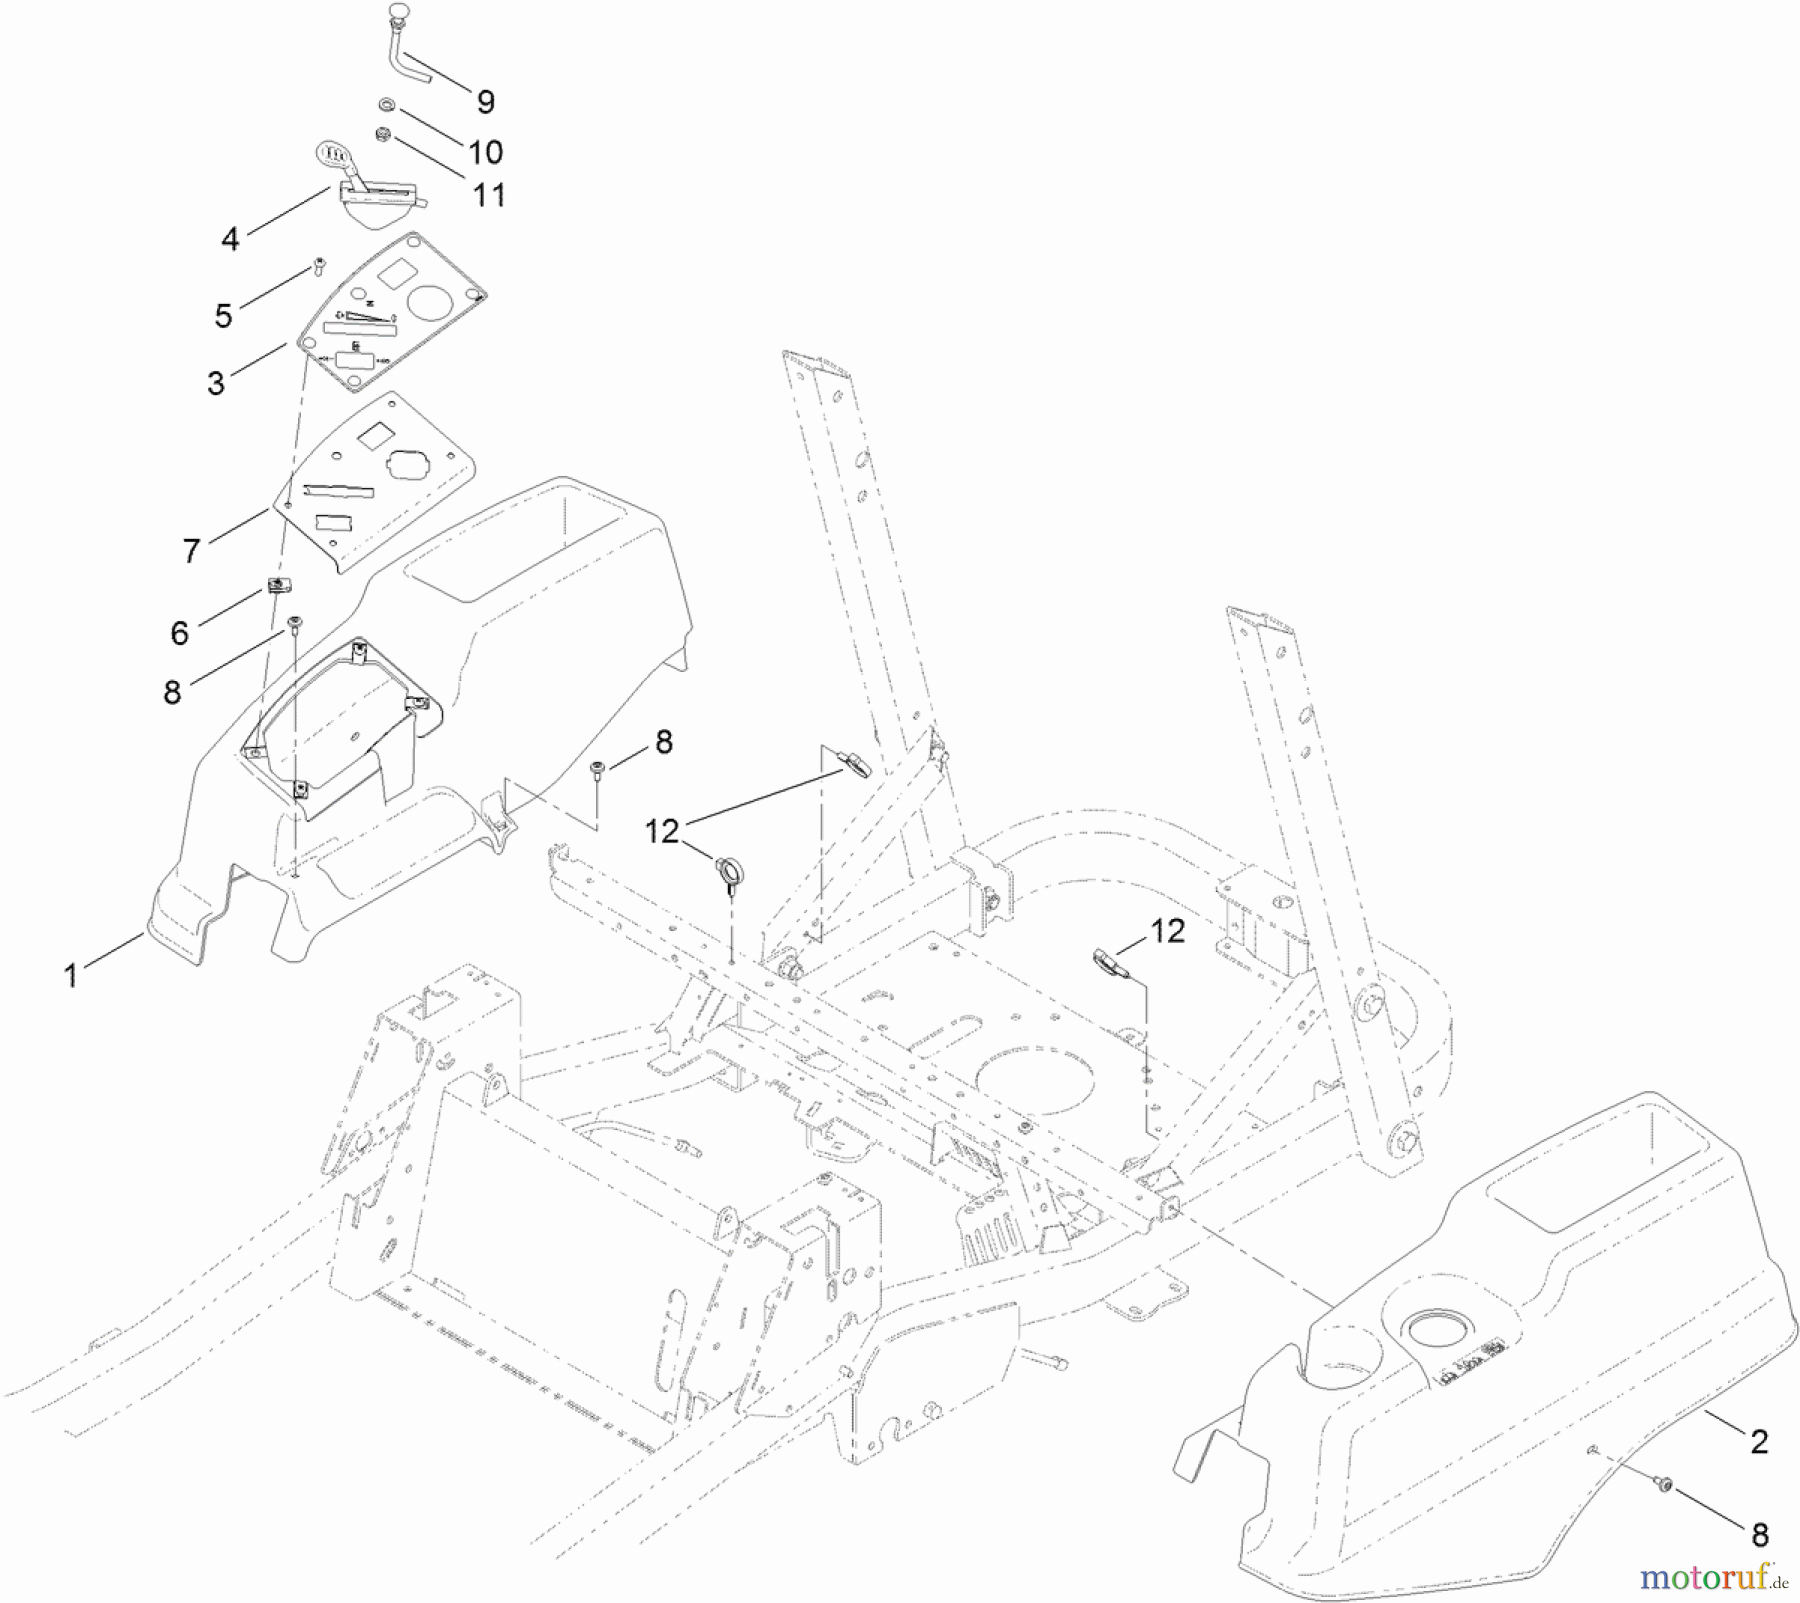  Toro Neu Mowers, Zero-Turn 74924 (ZX5420) - Toro TITAN ZX5420 Zero-Turn-Radius Riding Mower, 2012 (SN 312000001-312999999) CONTROL PANEL AND BODY STYLING POD ASSEMBLY